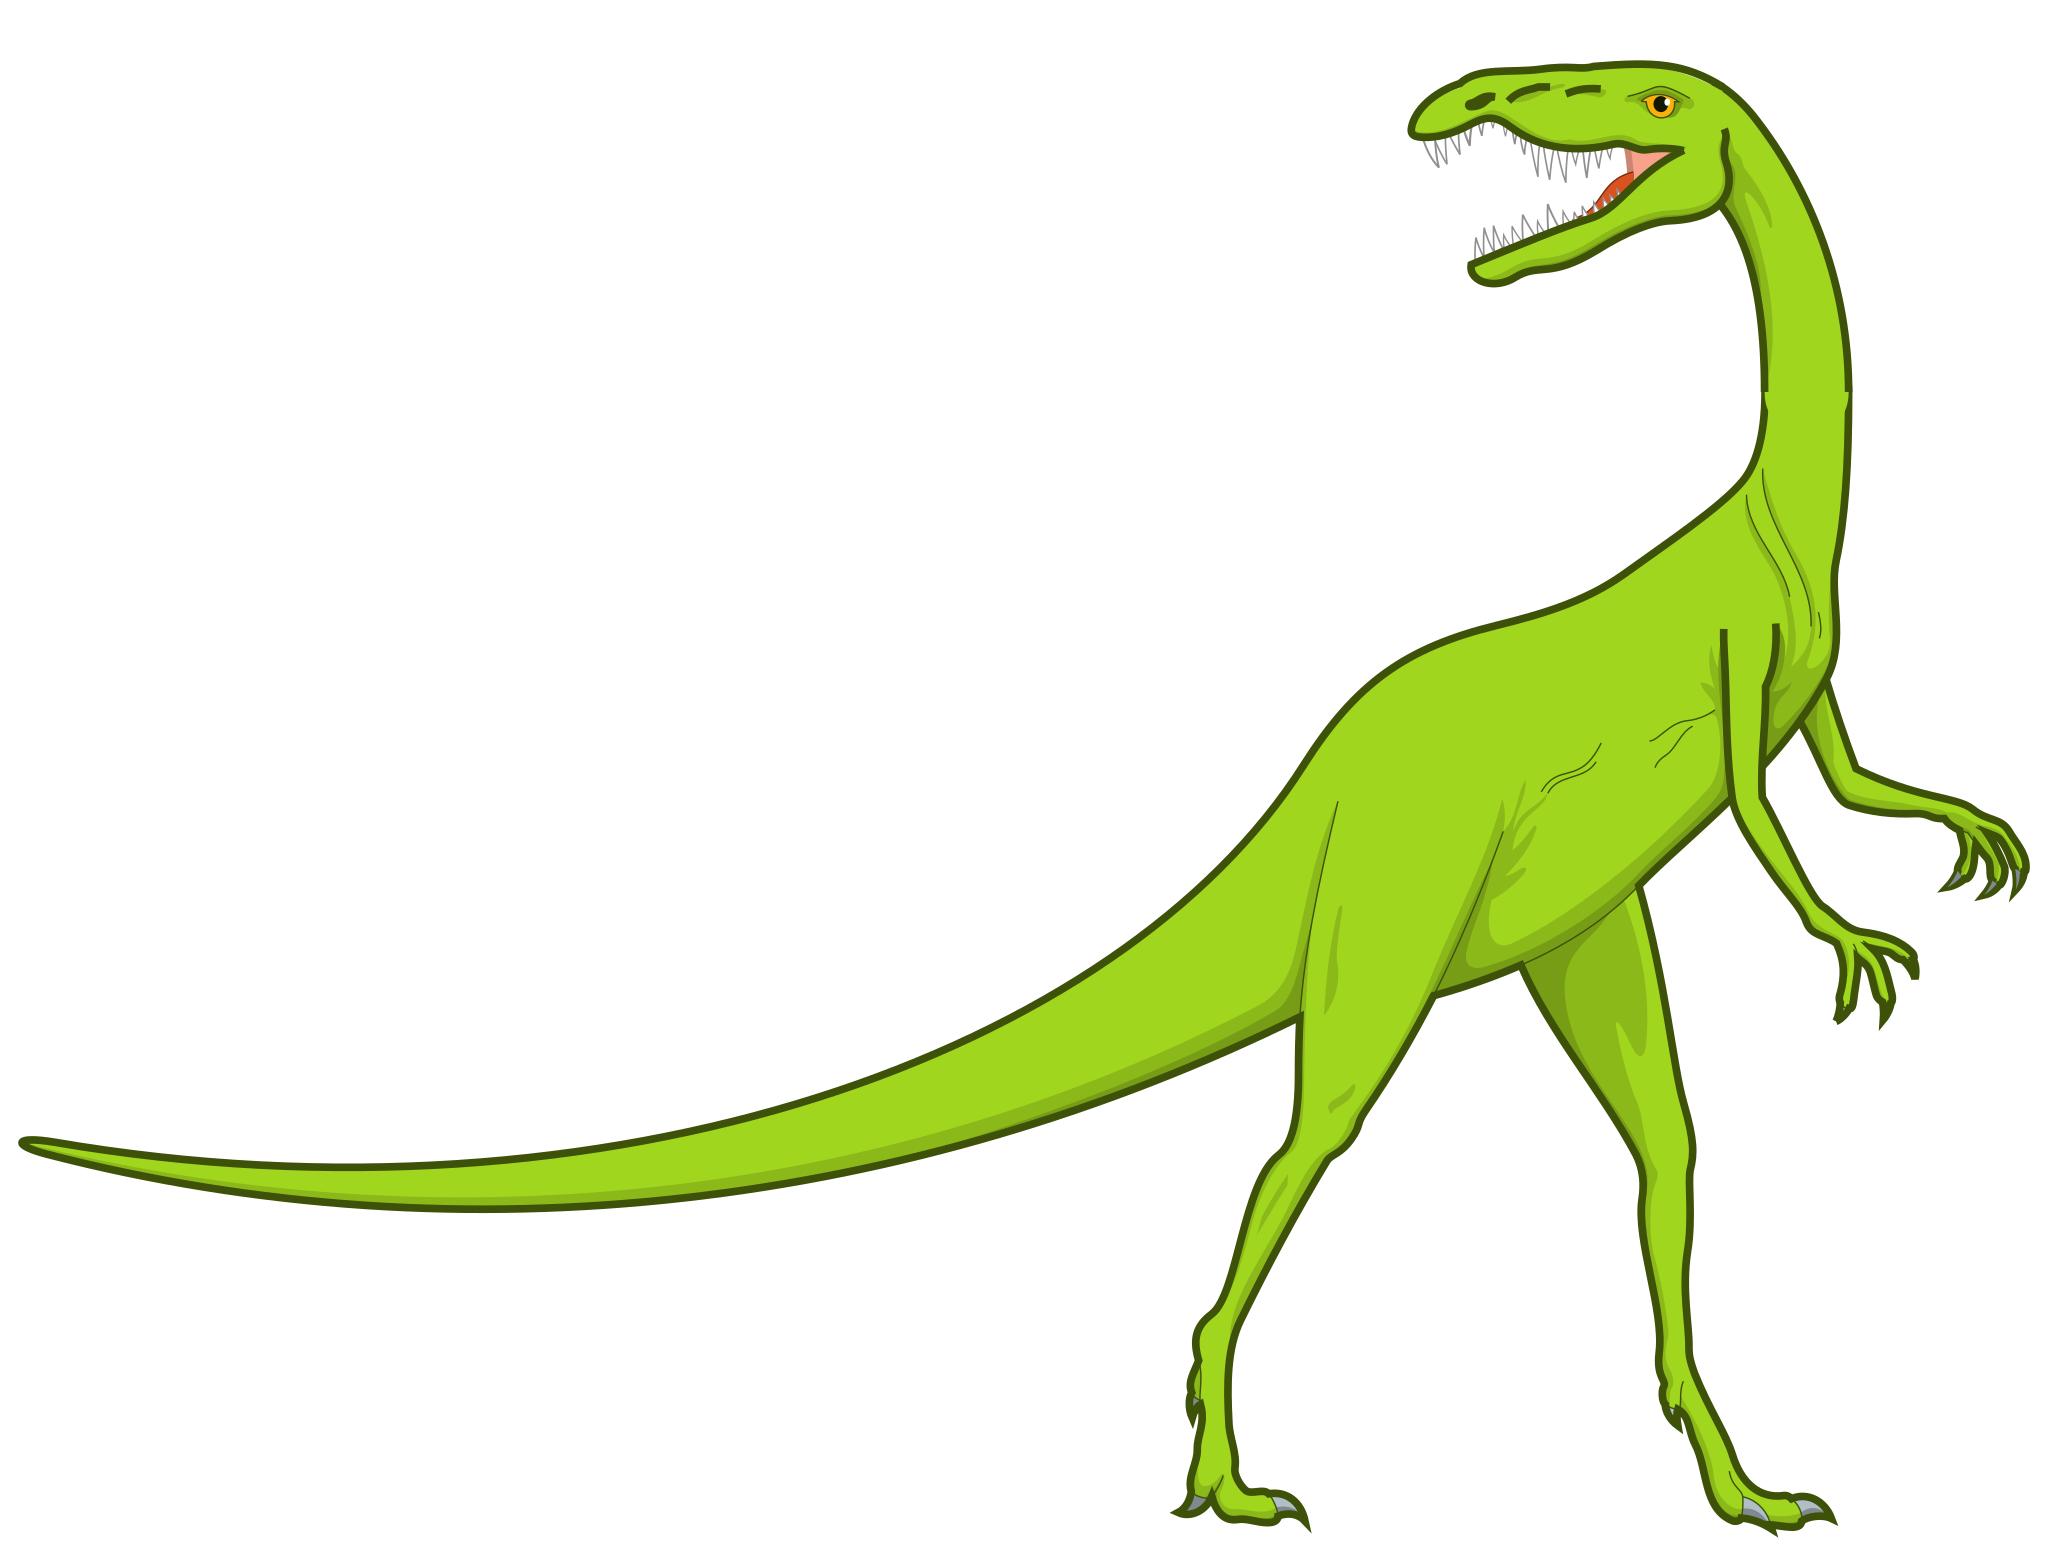 Хвост динозавра